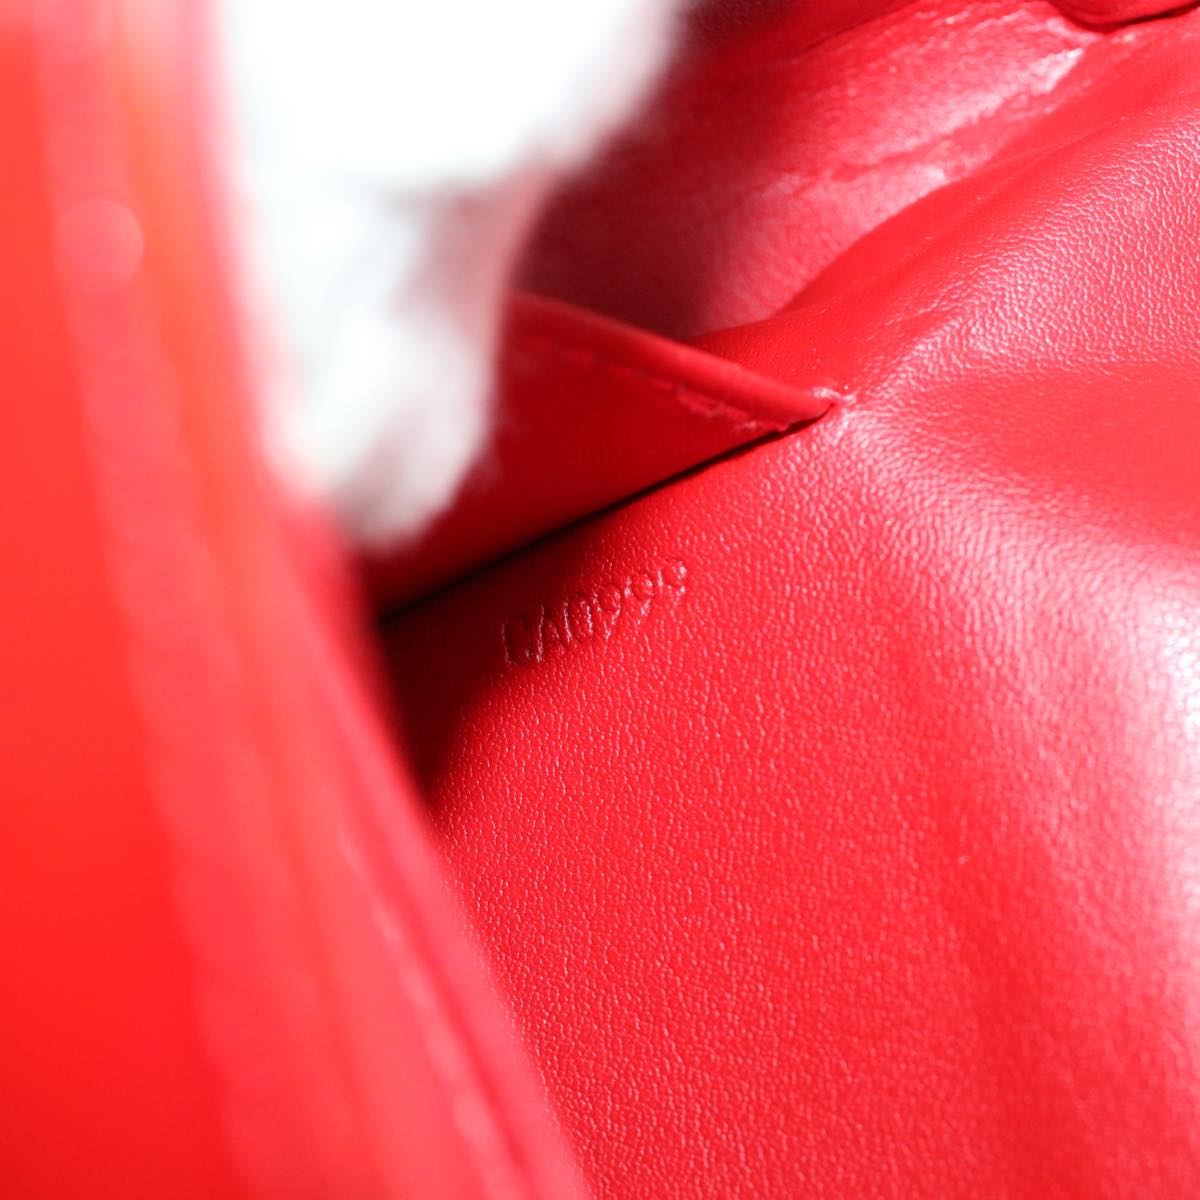 LOUIS VUITTON Monogram Vernis Thompson Street Shoulder Bag Red M91094 LV bs5076